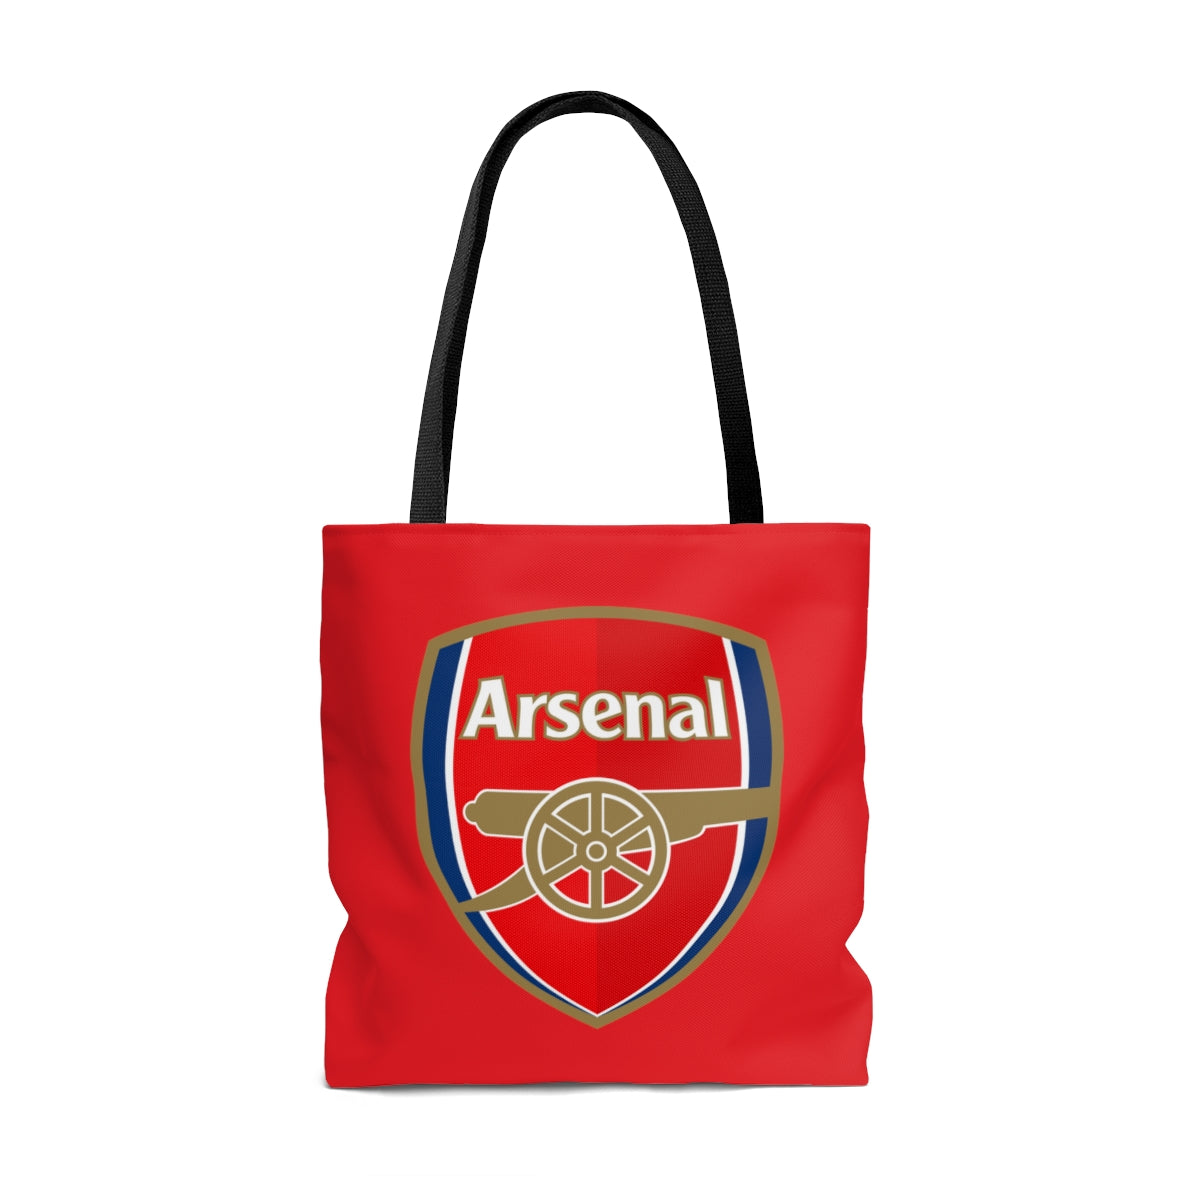 Arsenal Tote Bag